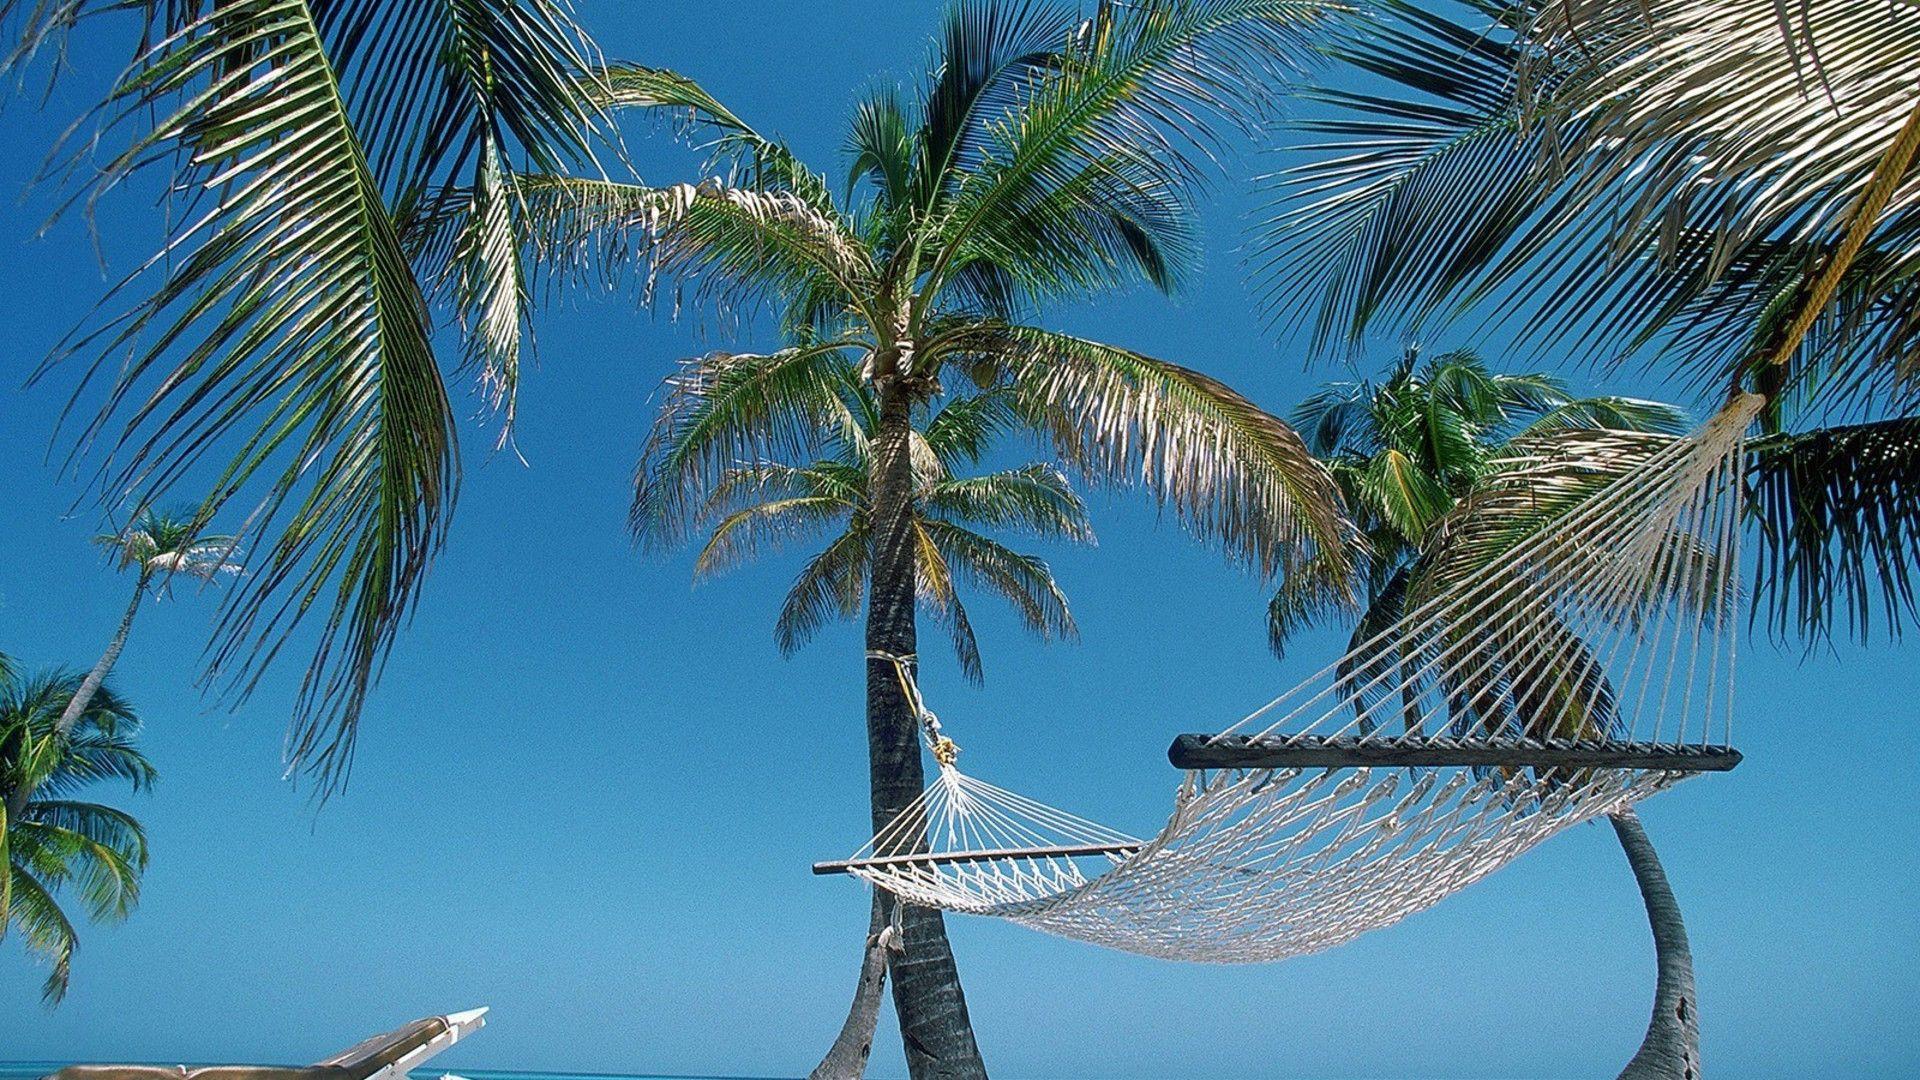 Nature beach hammock palm trees belize wallpaper